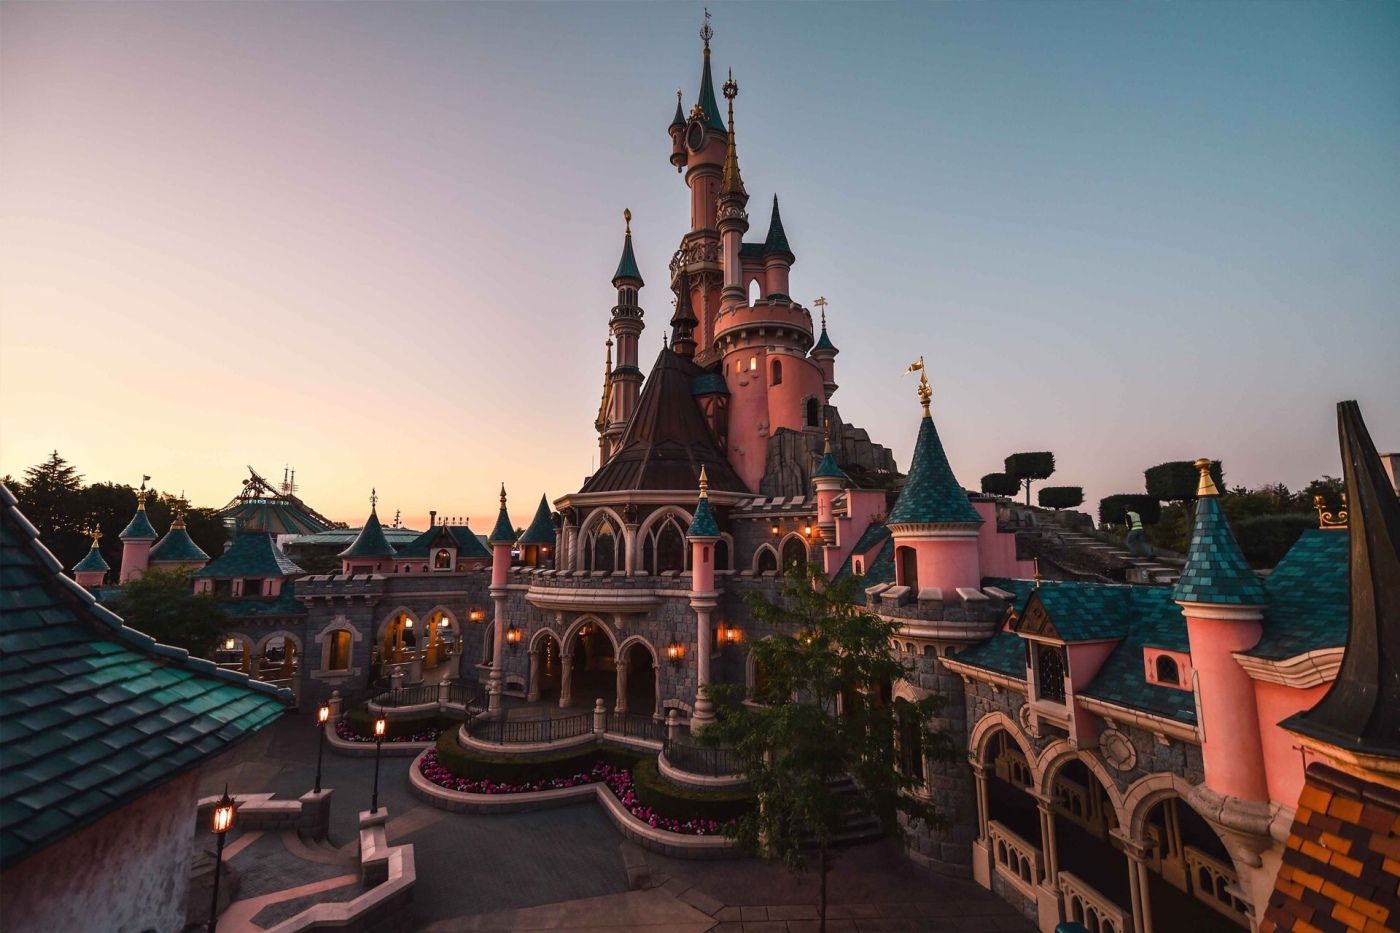 The pink castle of Disneyland Paris during the sunset - Disneyland